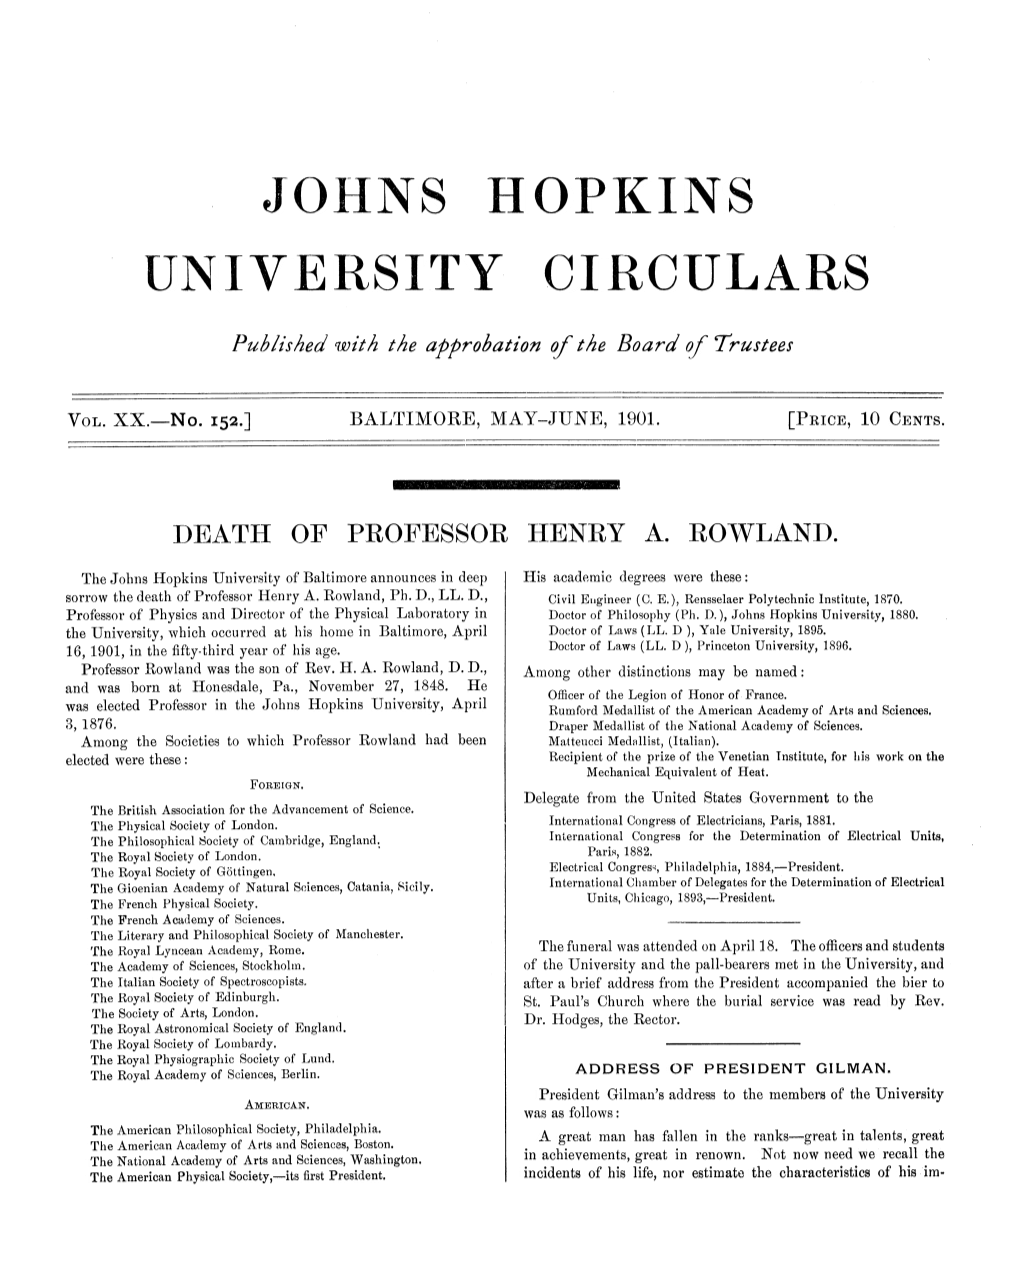 Johns Hopkins University Circulars